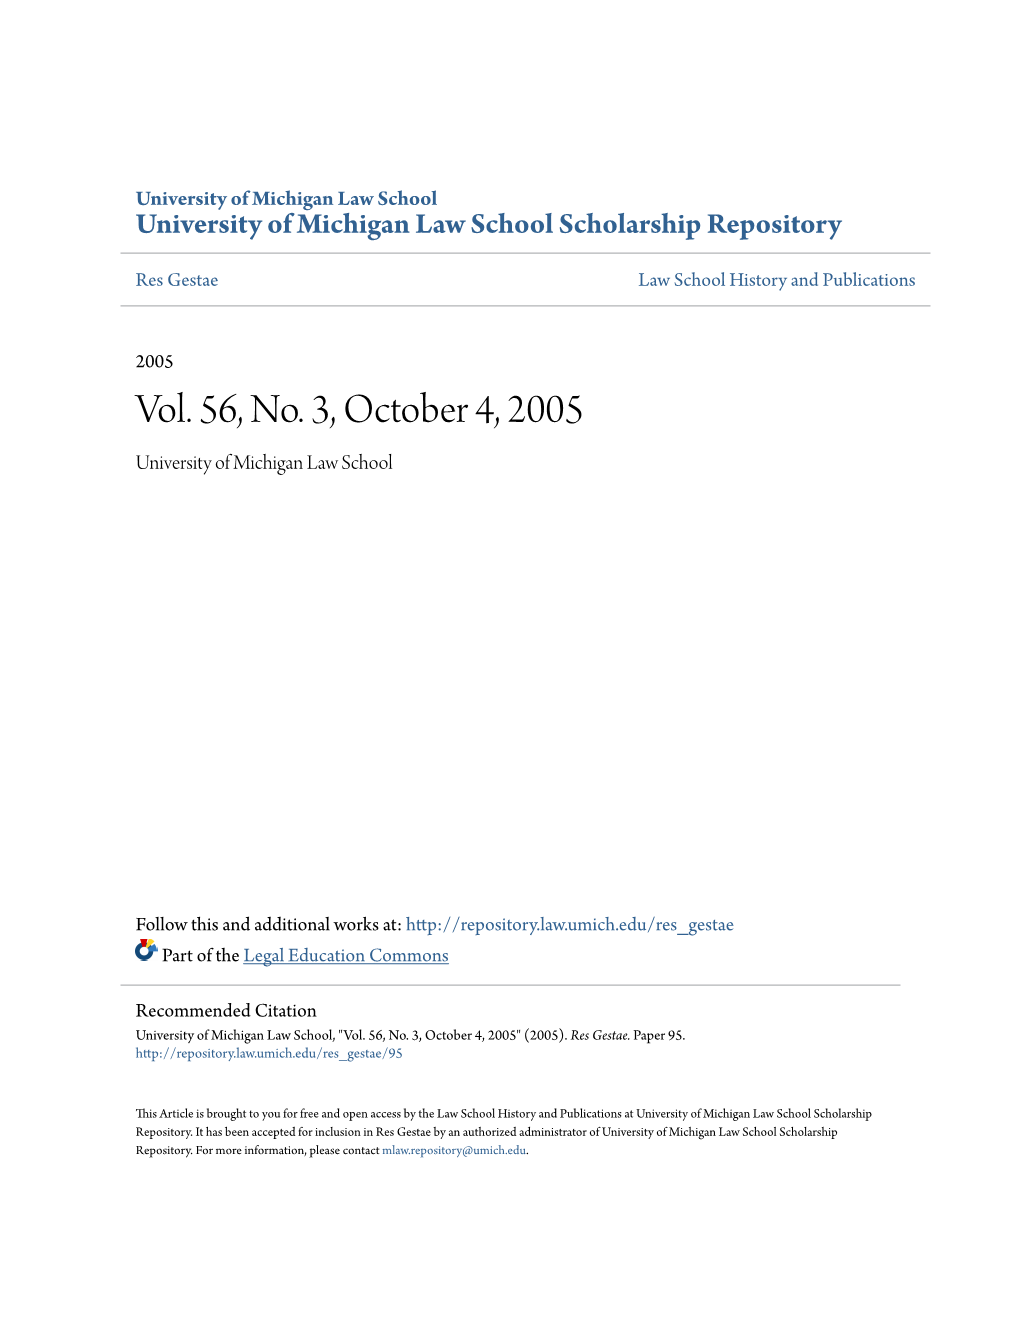 Vol. 56, No. 3, October 4, 2005 University of Michigan Law School